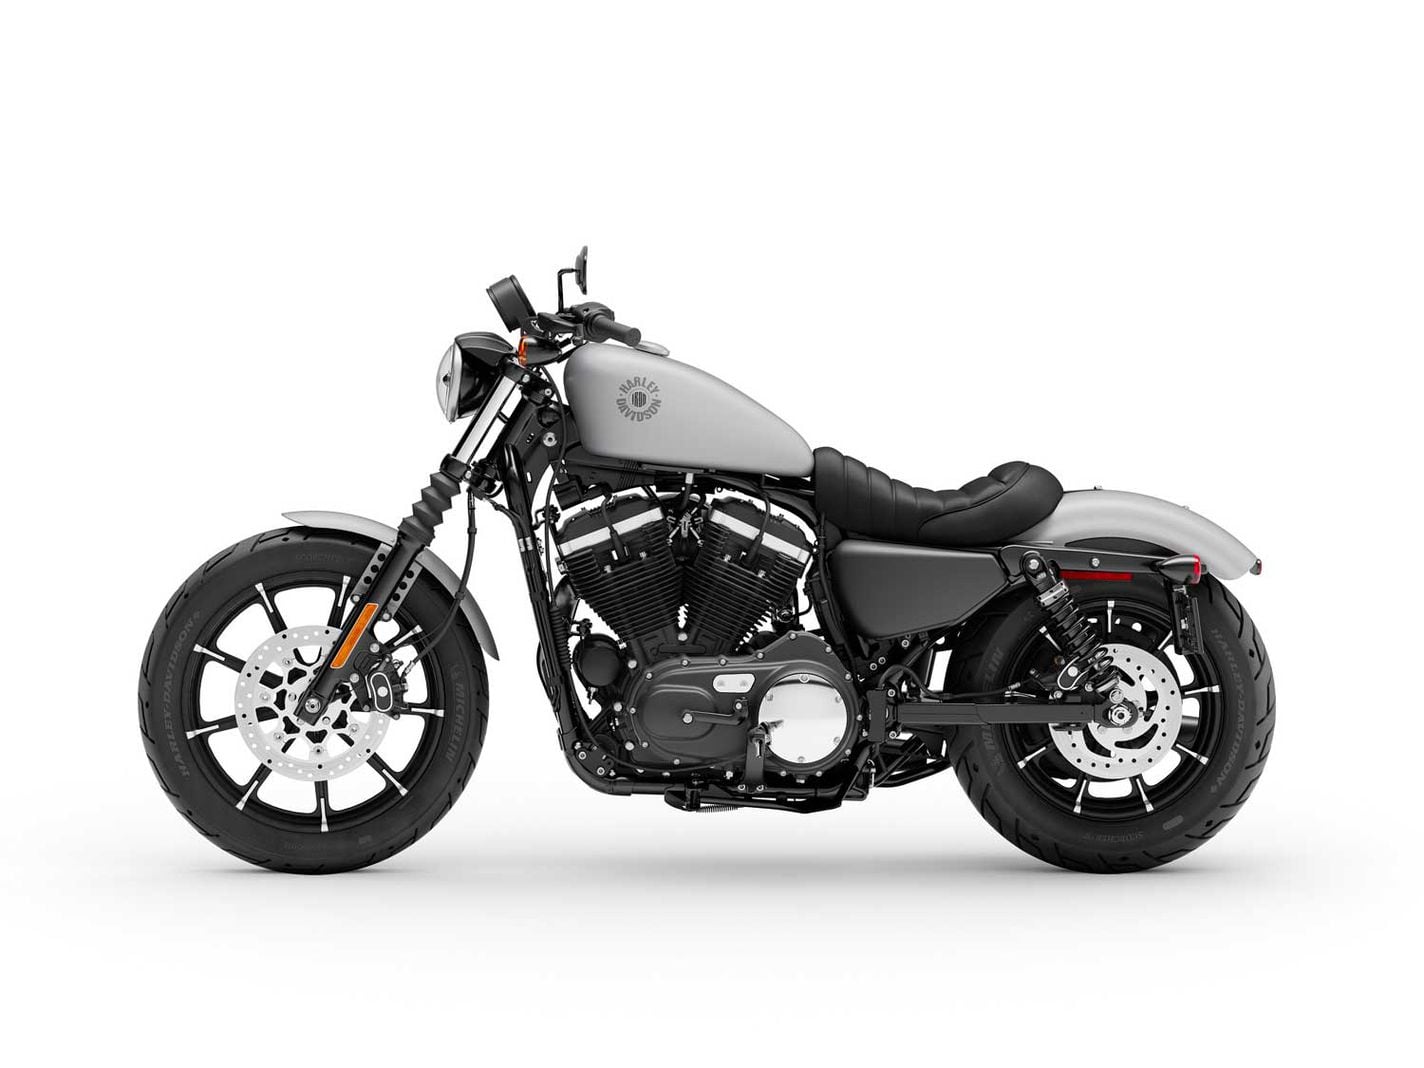 The 2020 Harley-Davidson Iron 883 on white background.